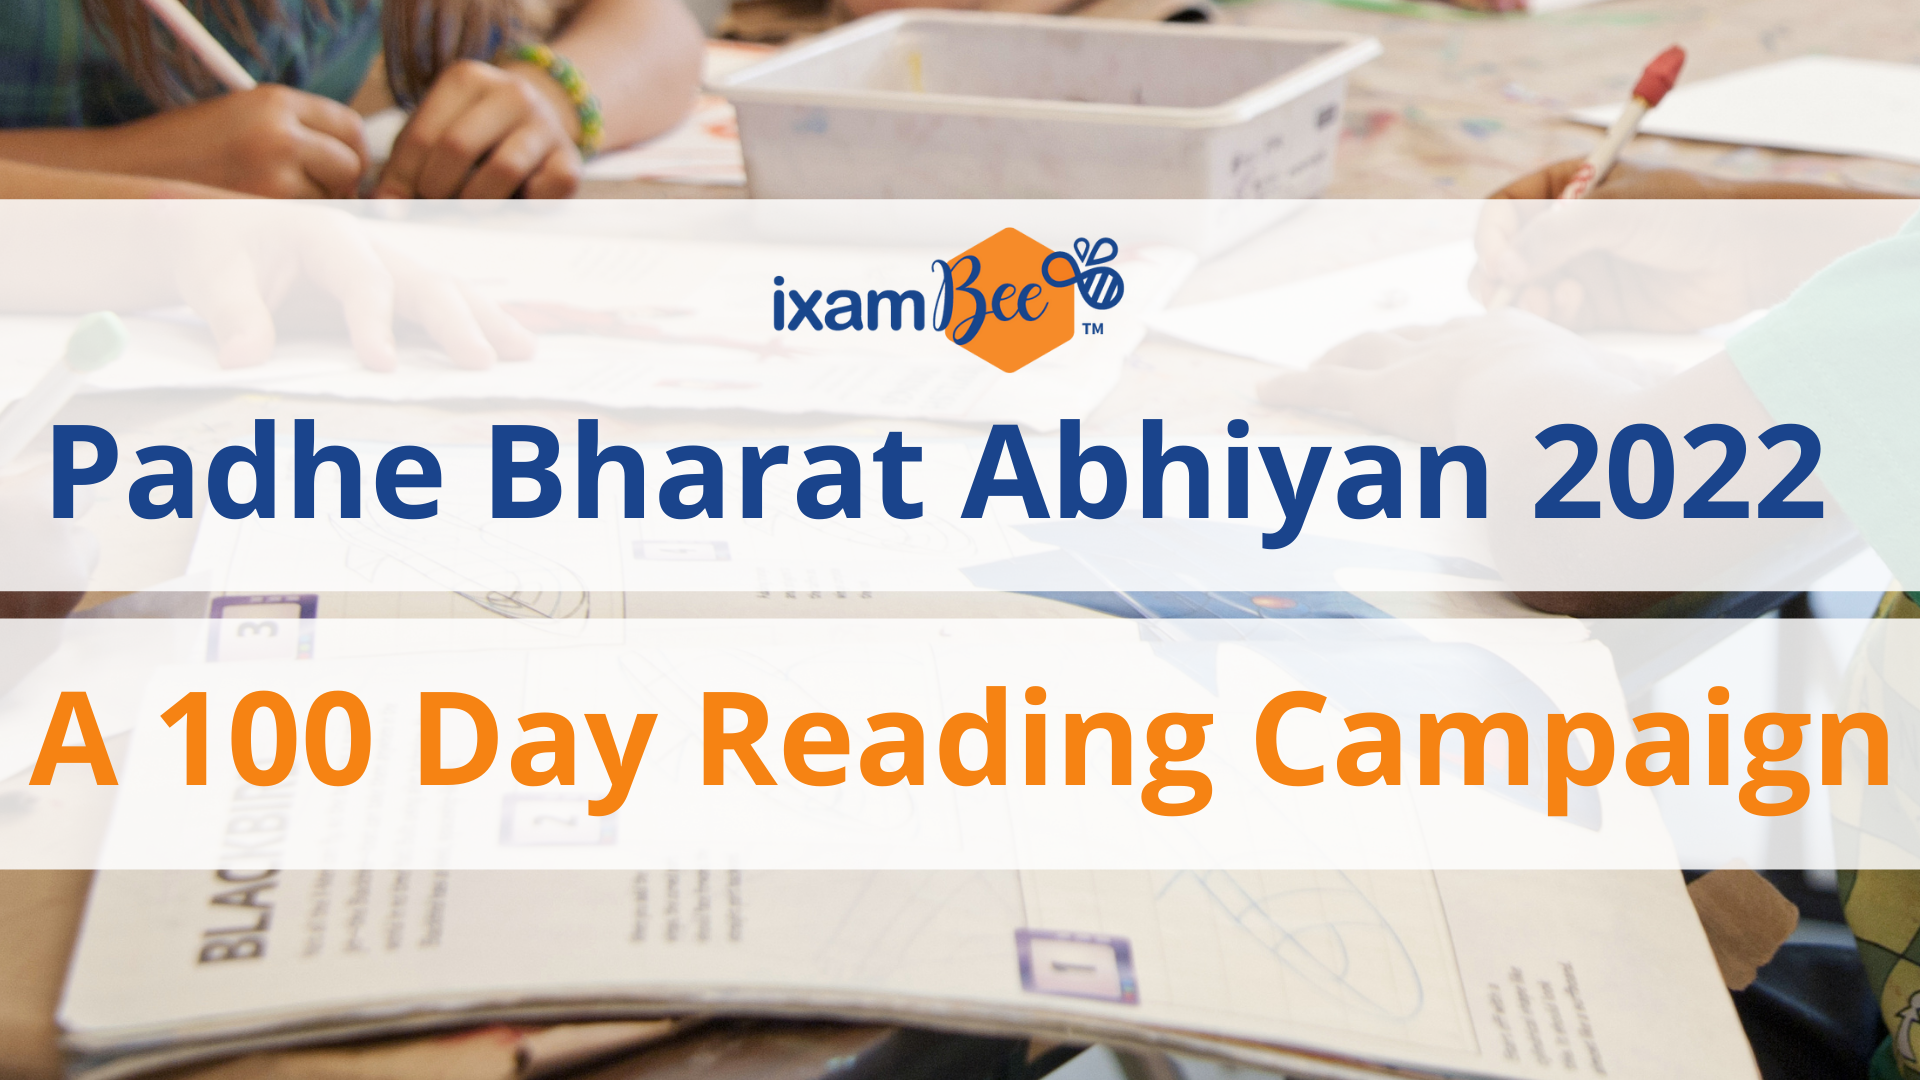 Padhey Bharat Abhiyan: A 100 Day Reading Campaign